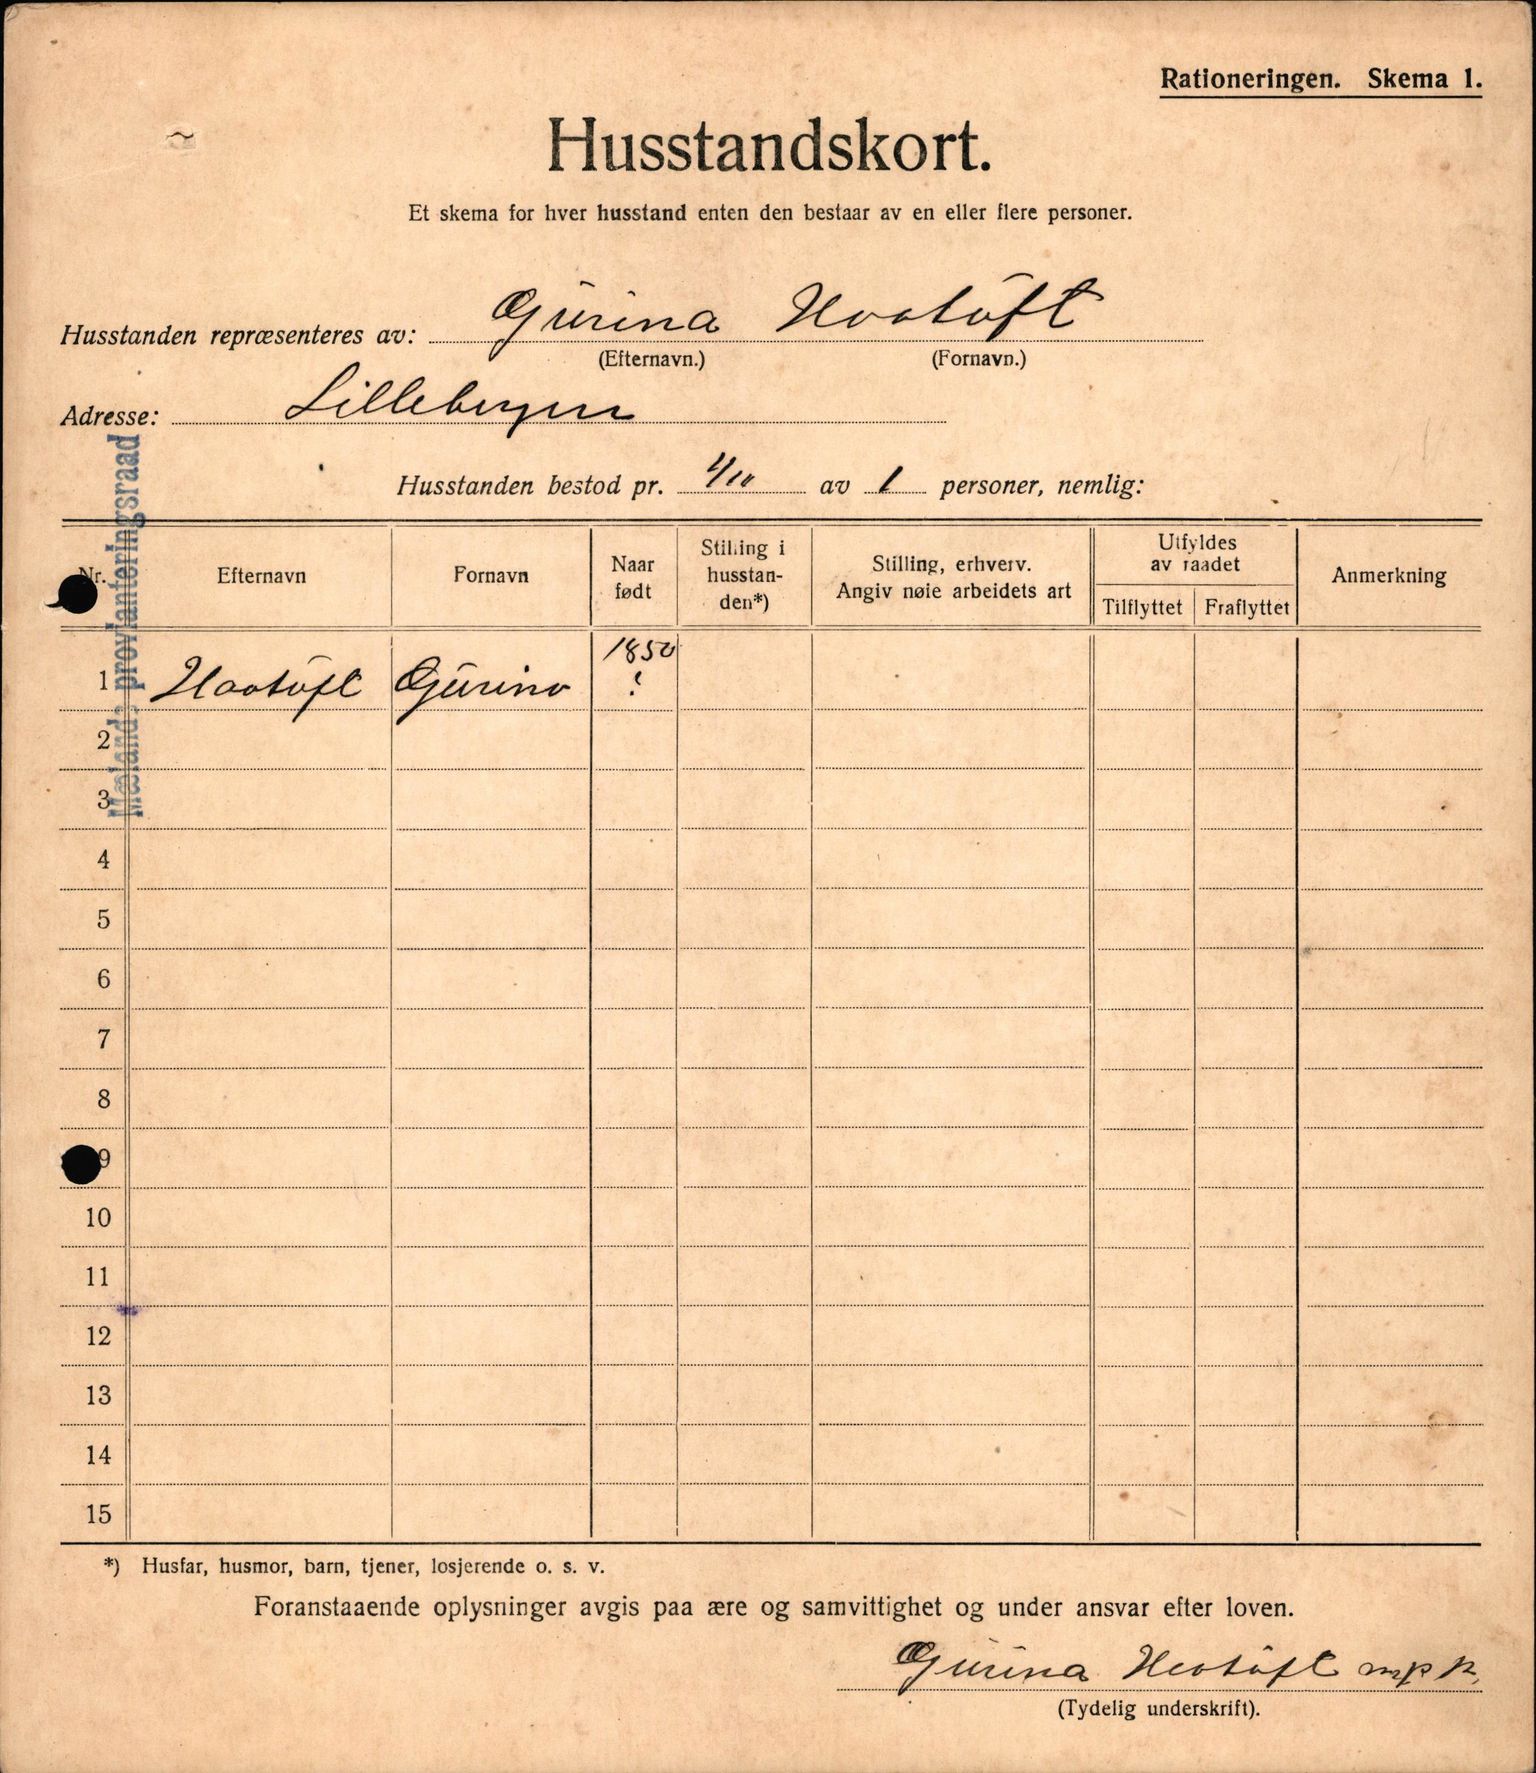 IKAH, Meland kommune, Provianteringsrådet, Husstander per 01.11.1917, 1917-1918, p. 270